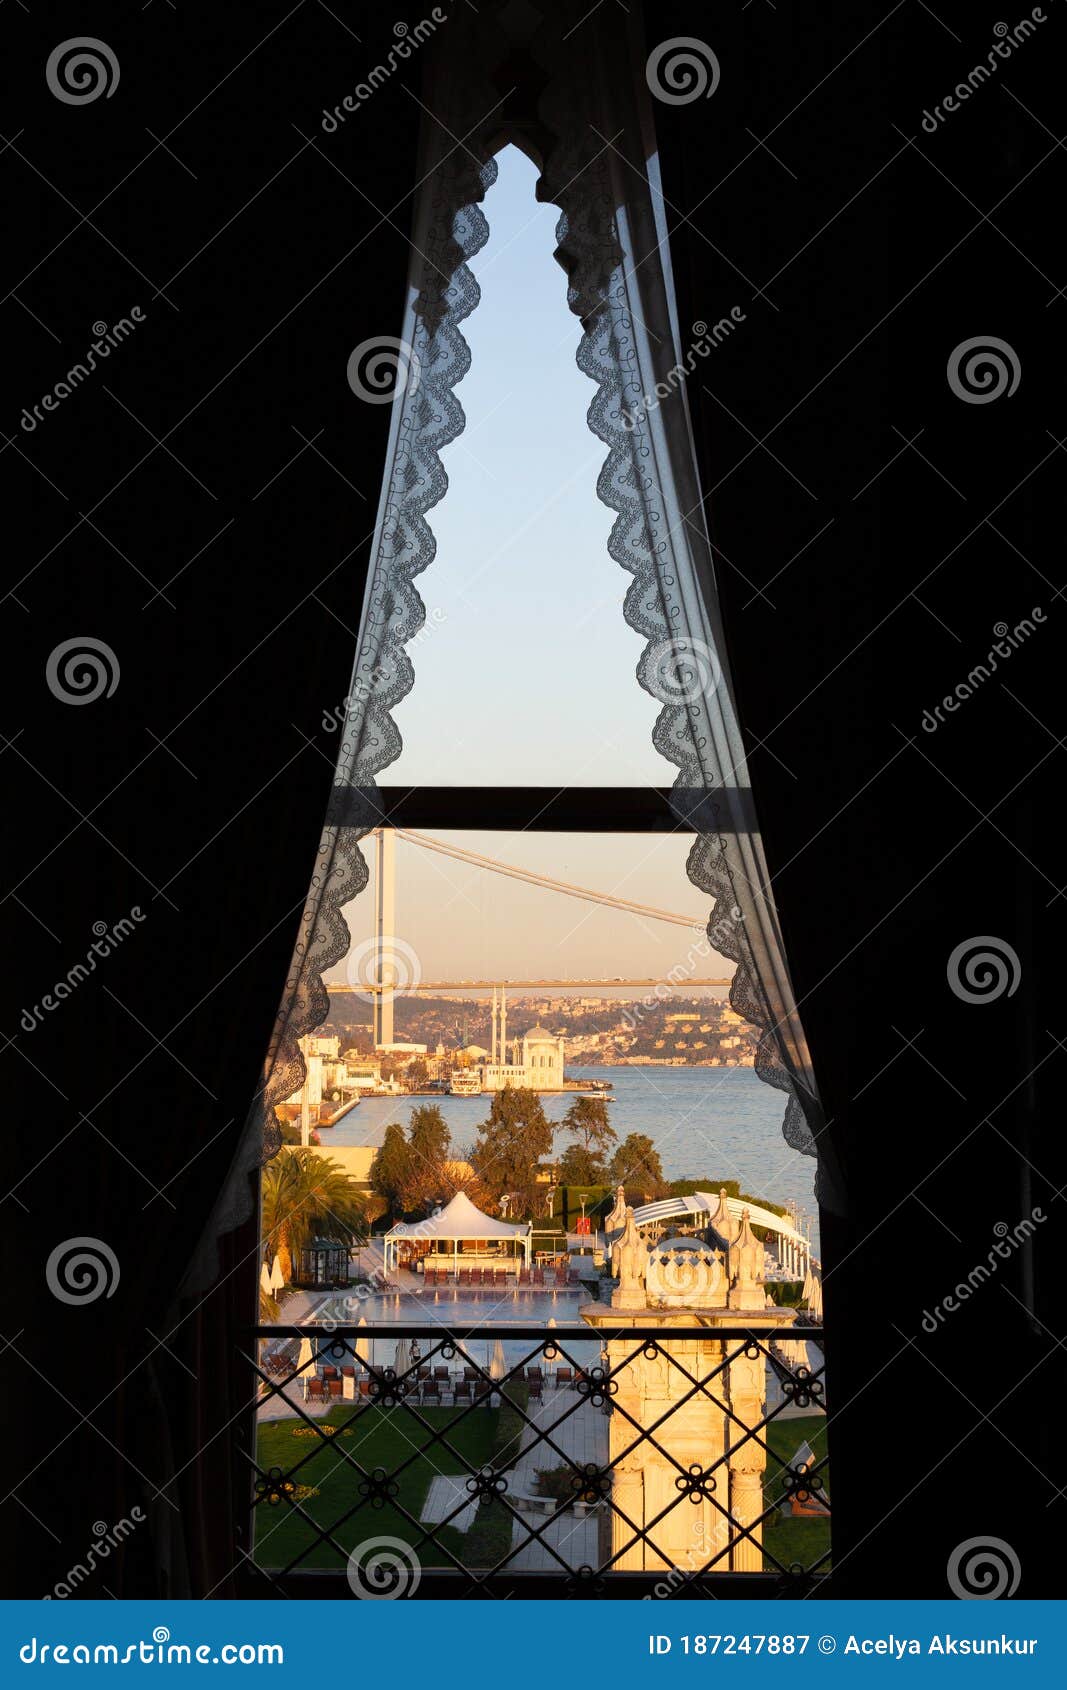 ortakoy buyuk mecidiye mosque and 15 temmuz sehitler bogazici bridge through a window with lace curtains